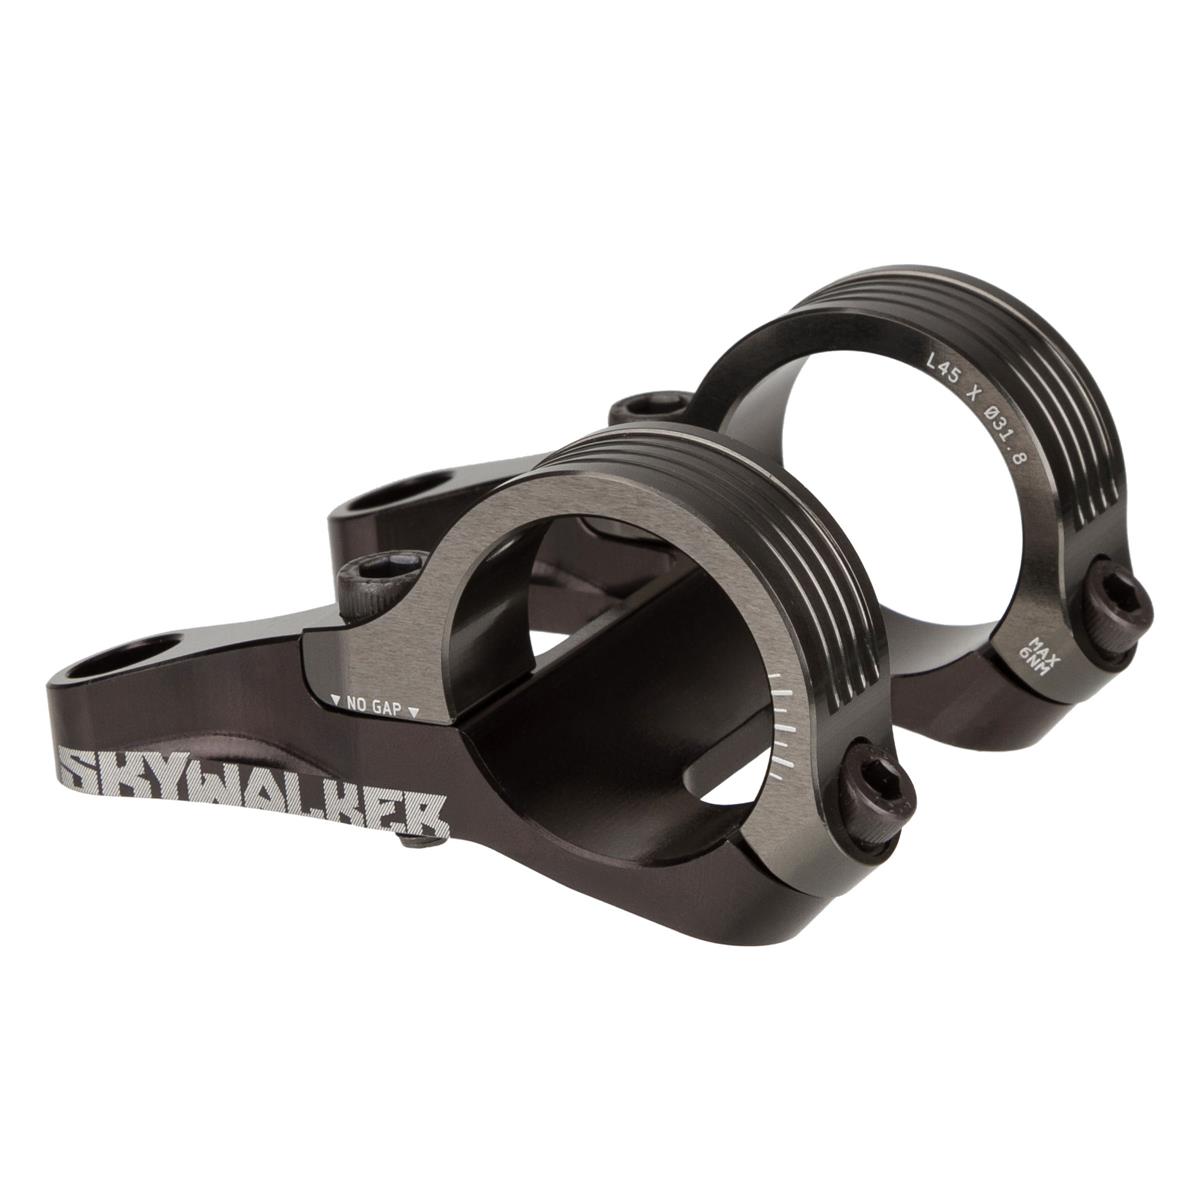 Sixpack MTB Stem Skywalker Direct Mount Black/Grey, 31.8 mm, 45 mm Reach